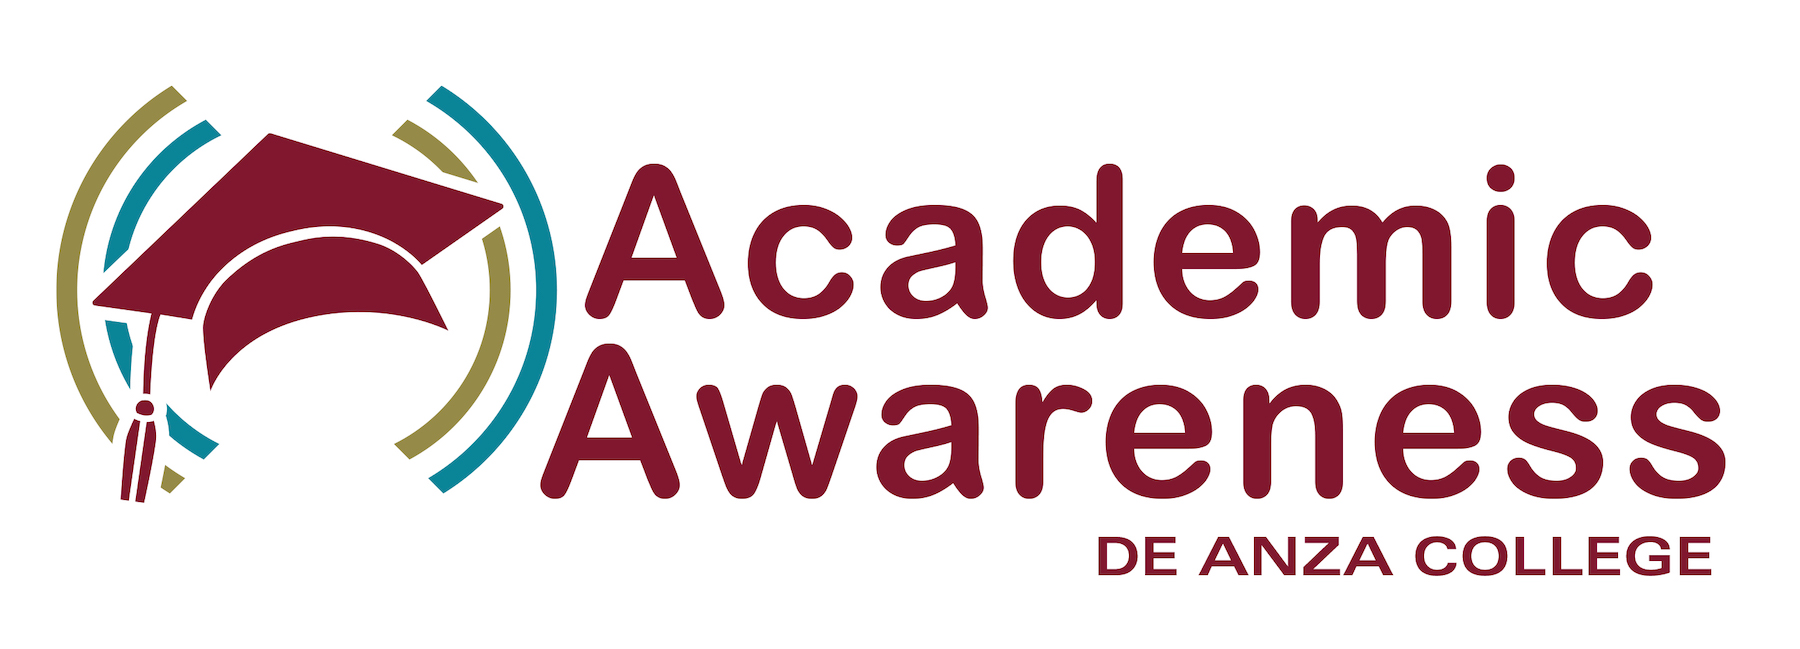 Academic Awareness | De Anza College | image of graduation cap